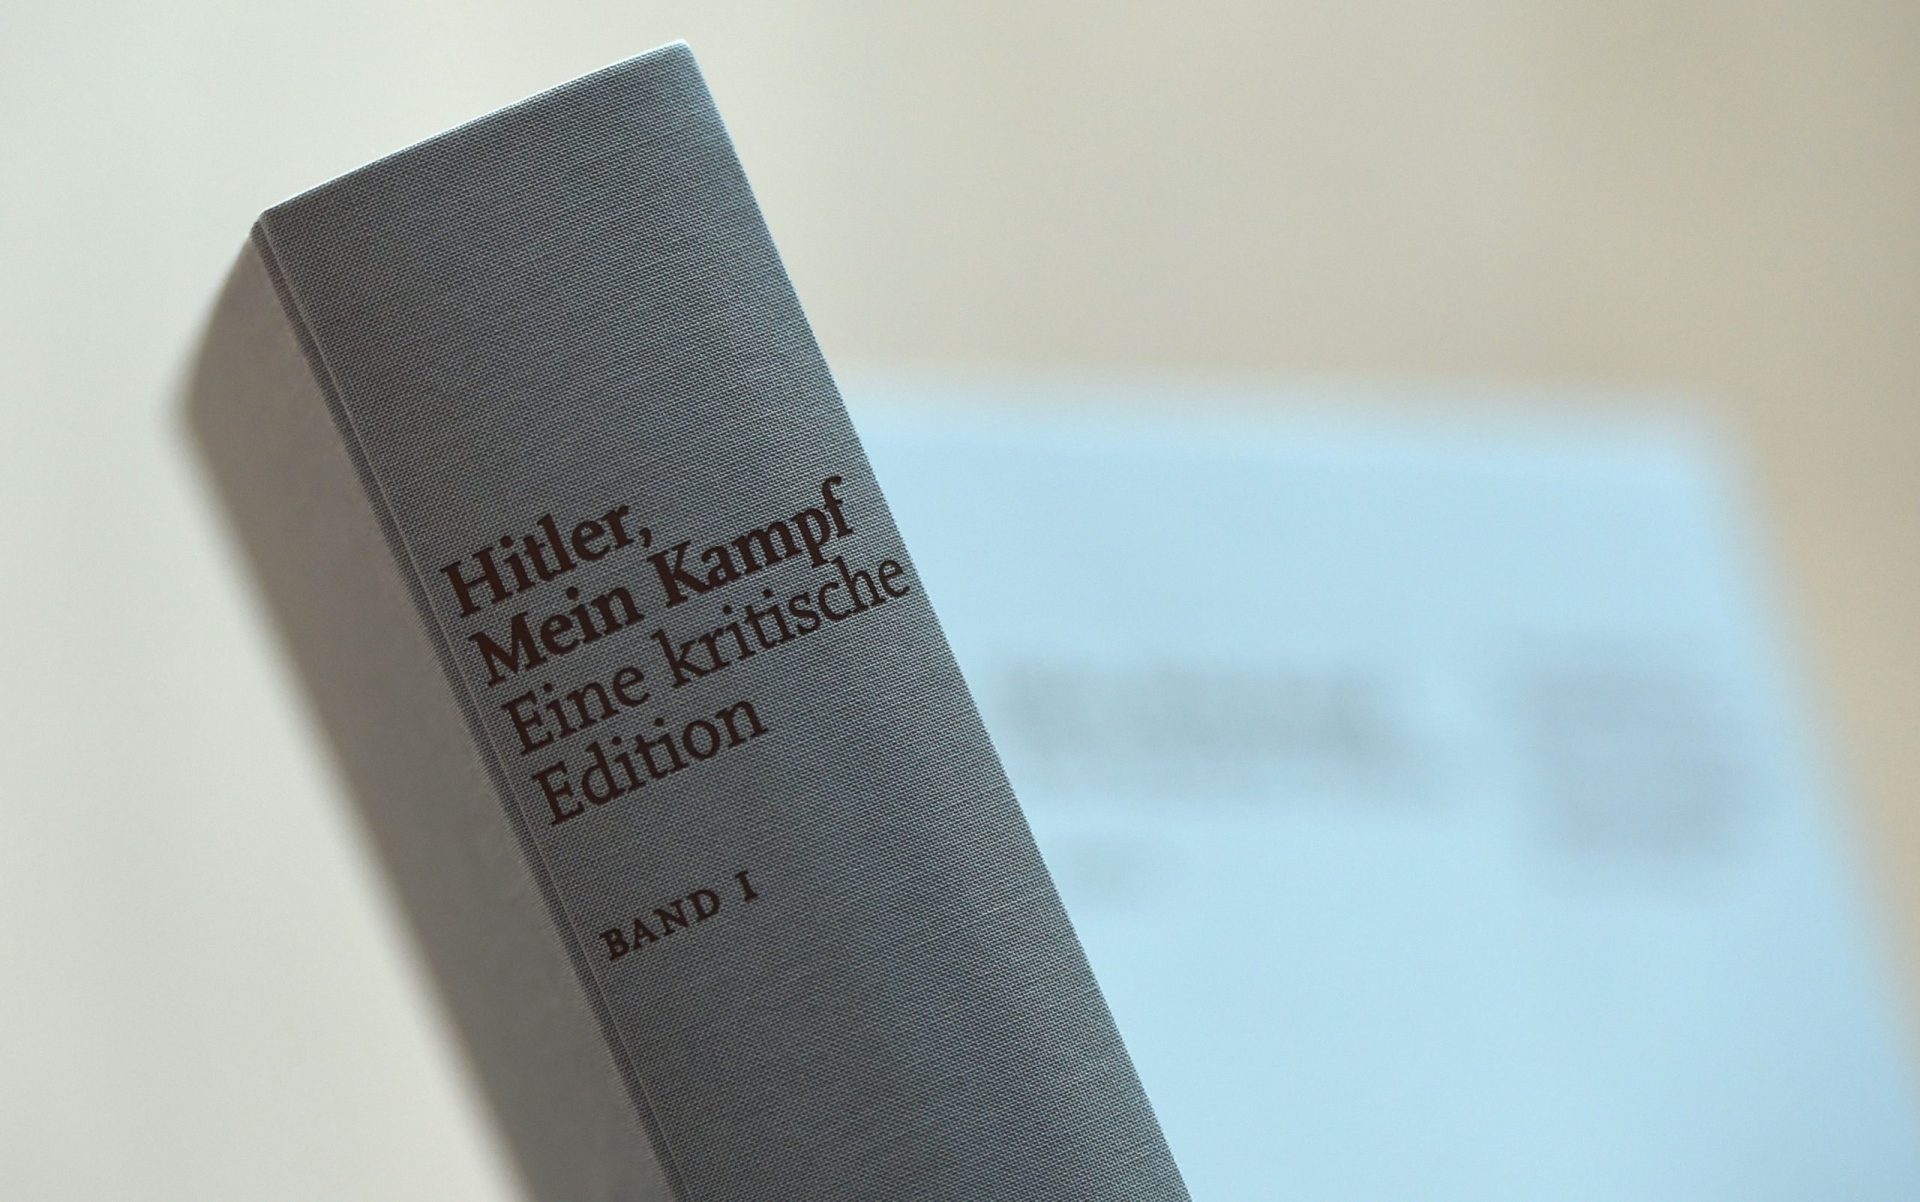 Edição crítica de Mein Kampf torna-se bestseller